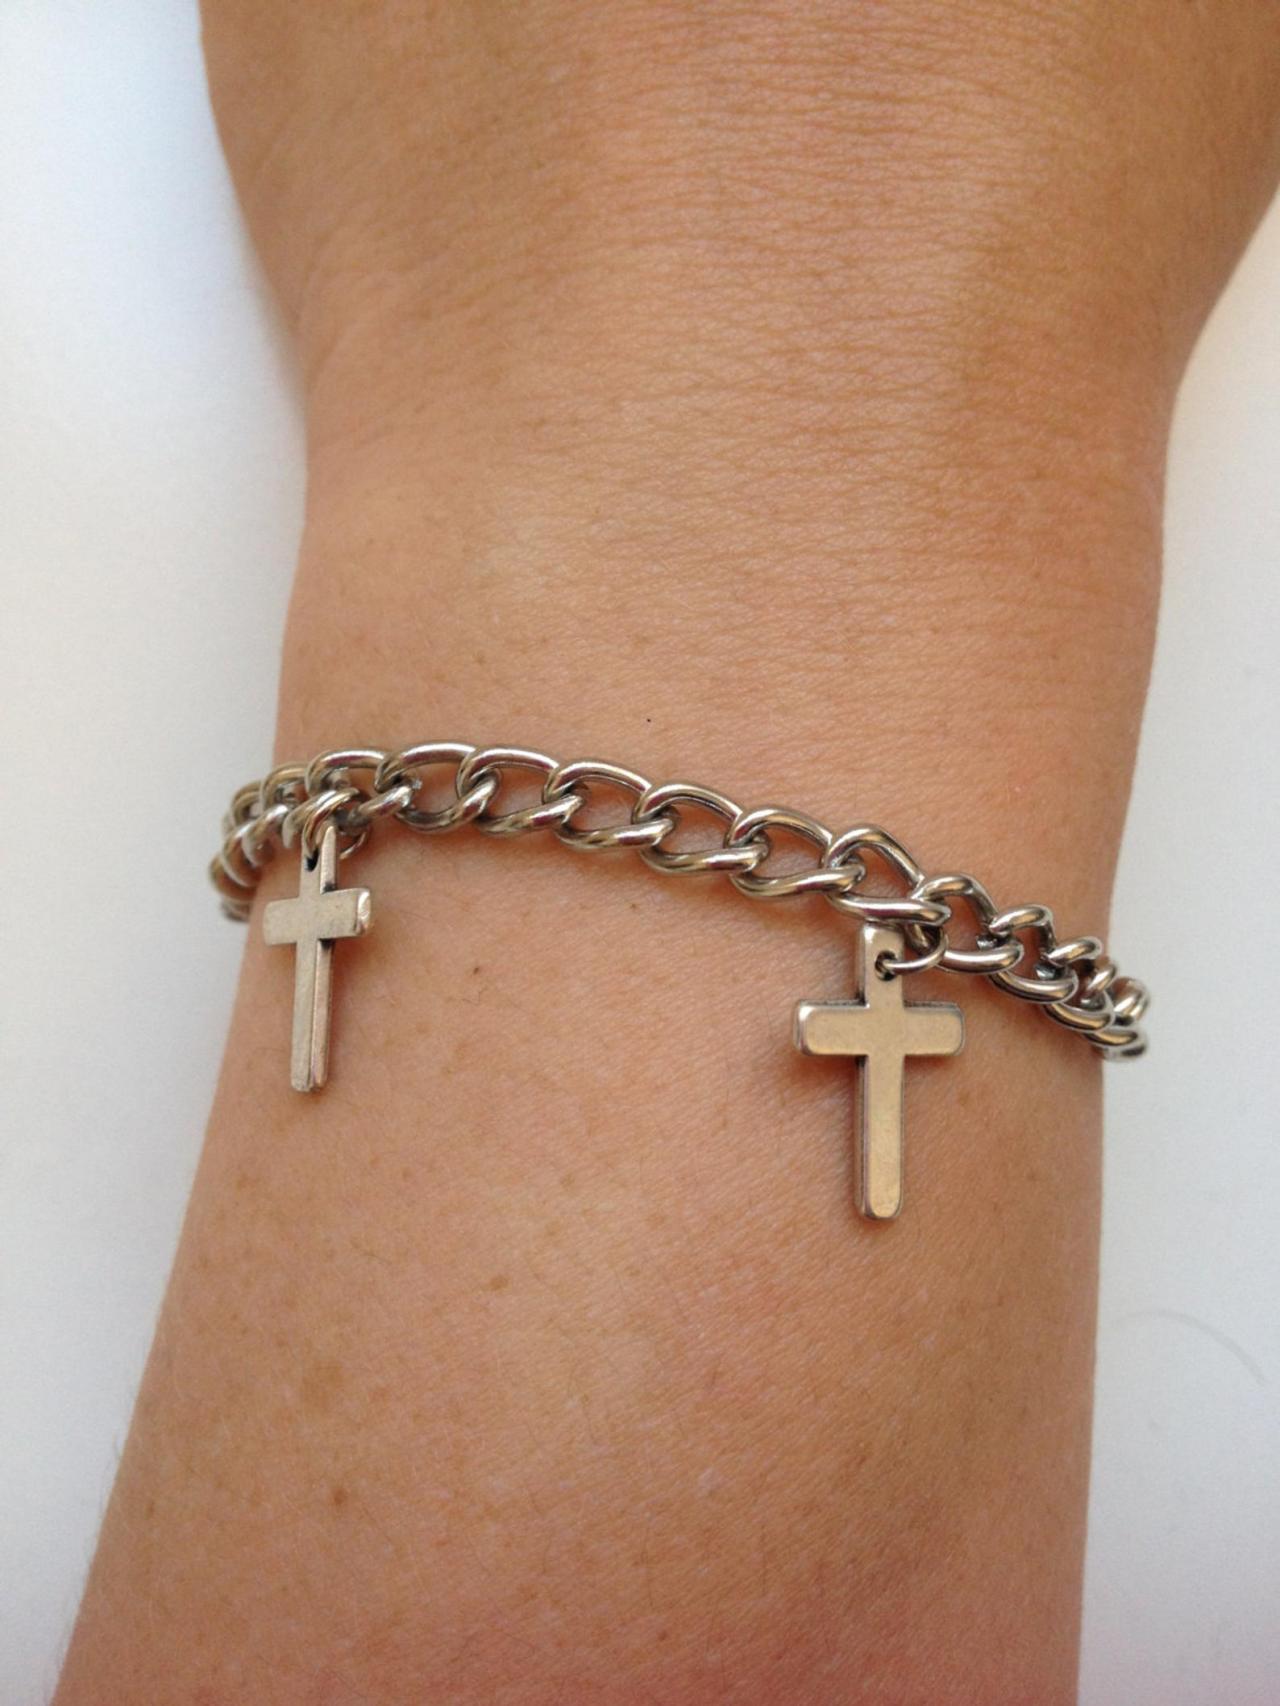 Cross chainBracelet 10- love faith friendship rock metal chain cuff bracelet cross gift adjustable current womenswear unique